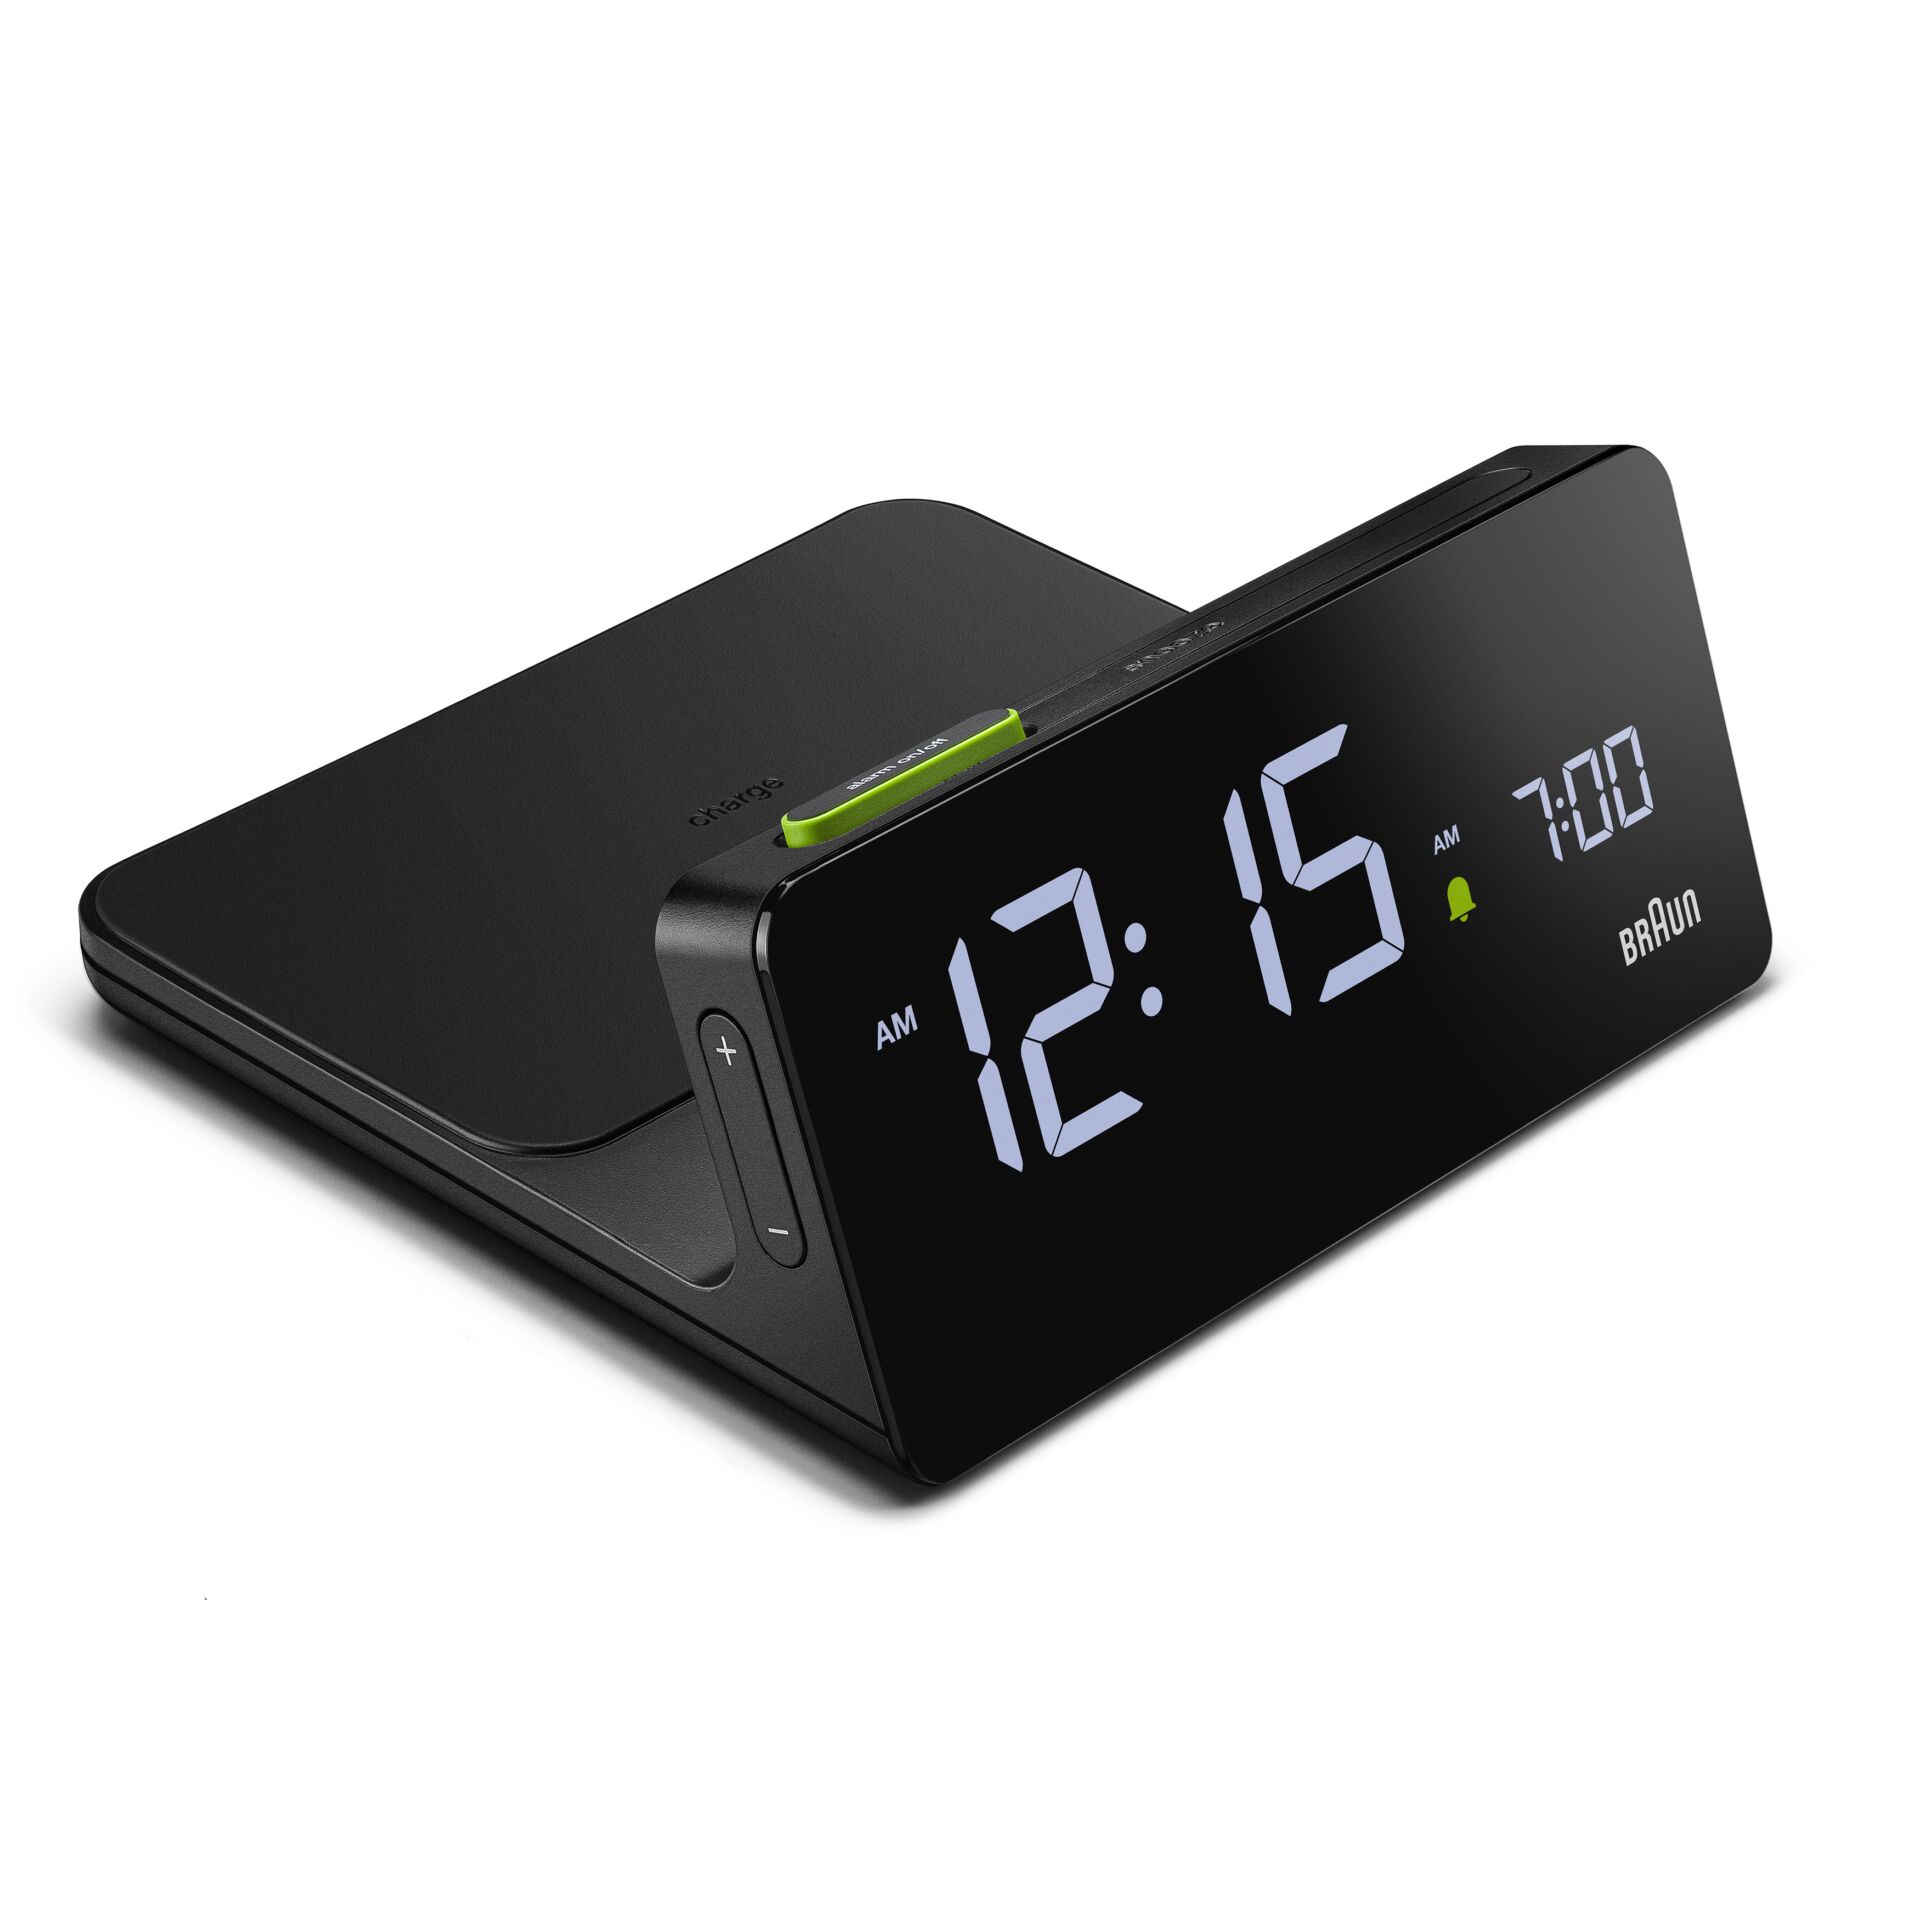 BRAUN BC21 BEU Digital Alarm Clock